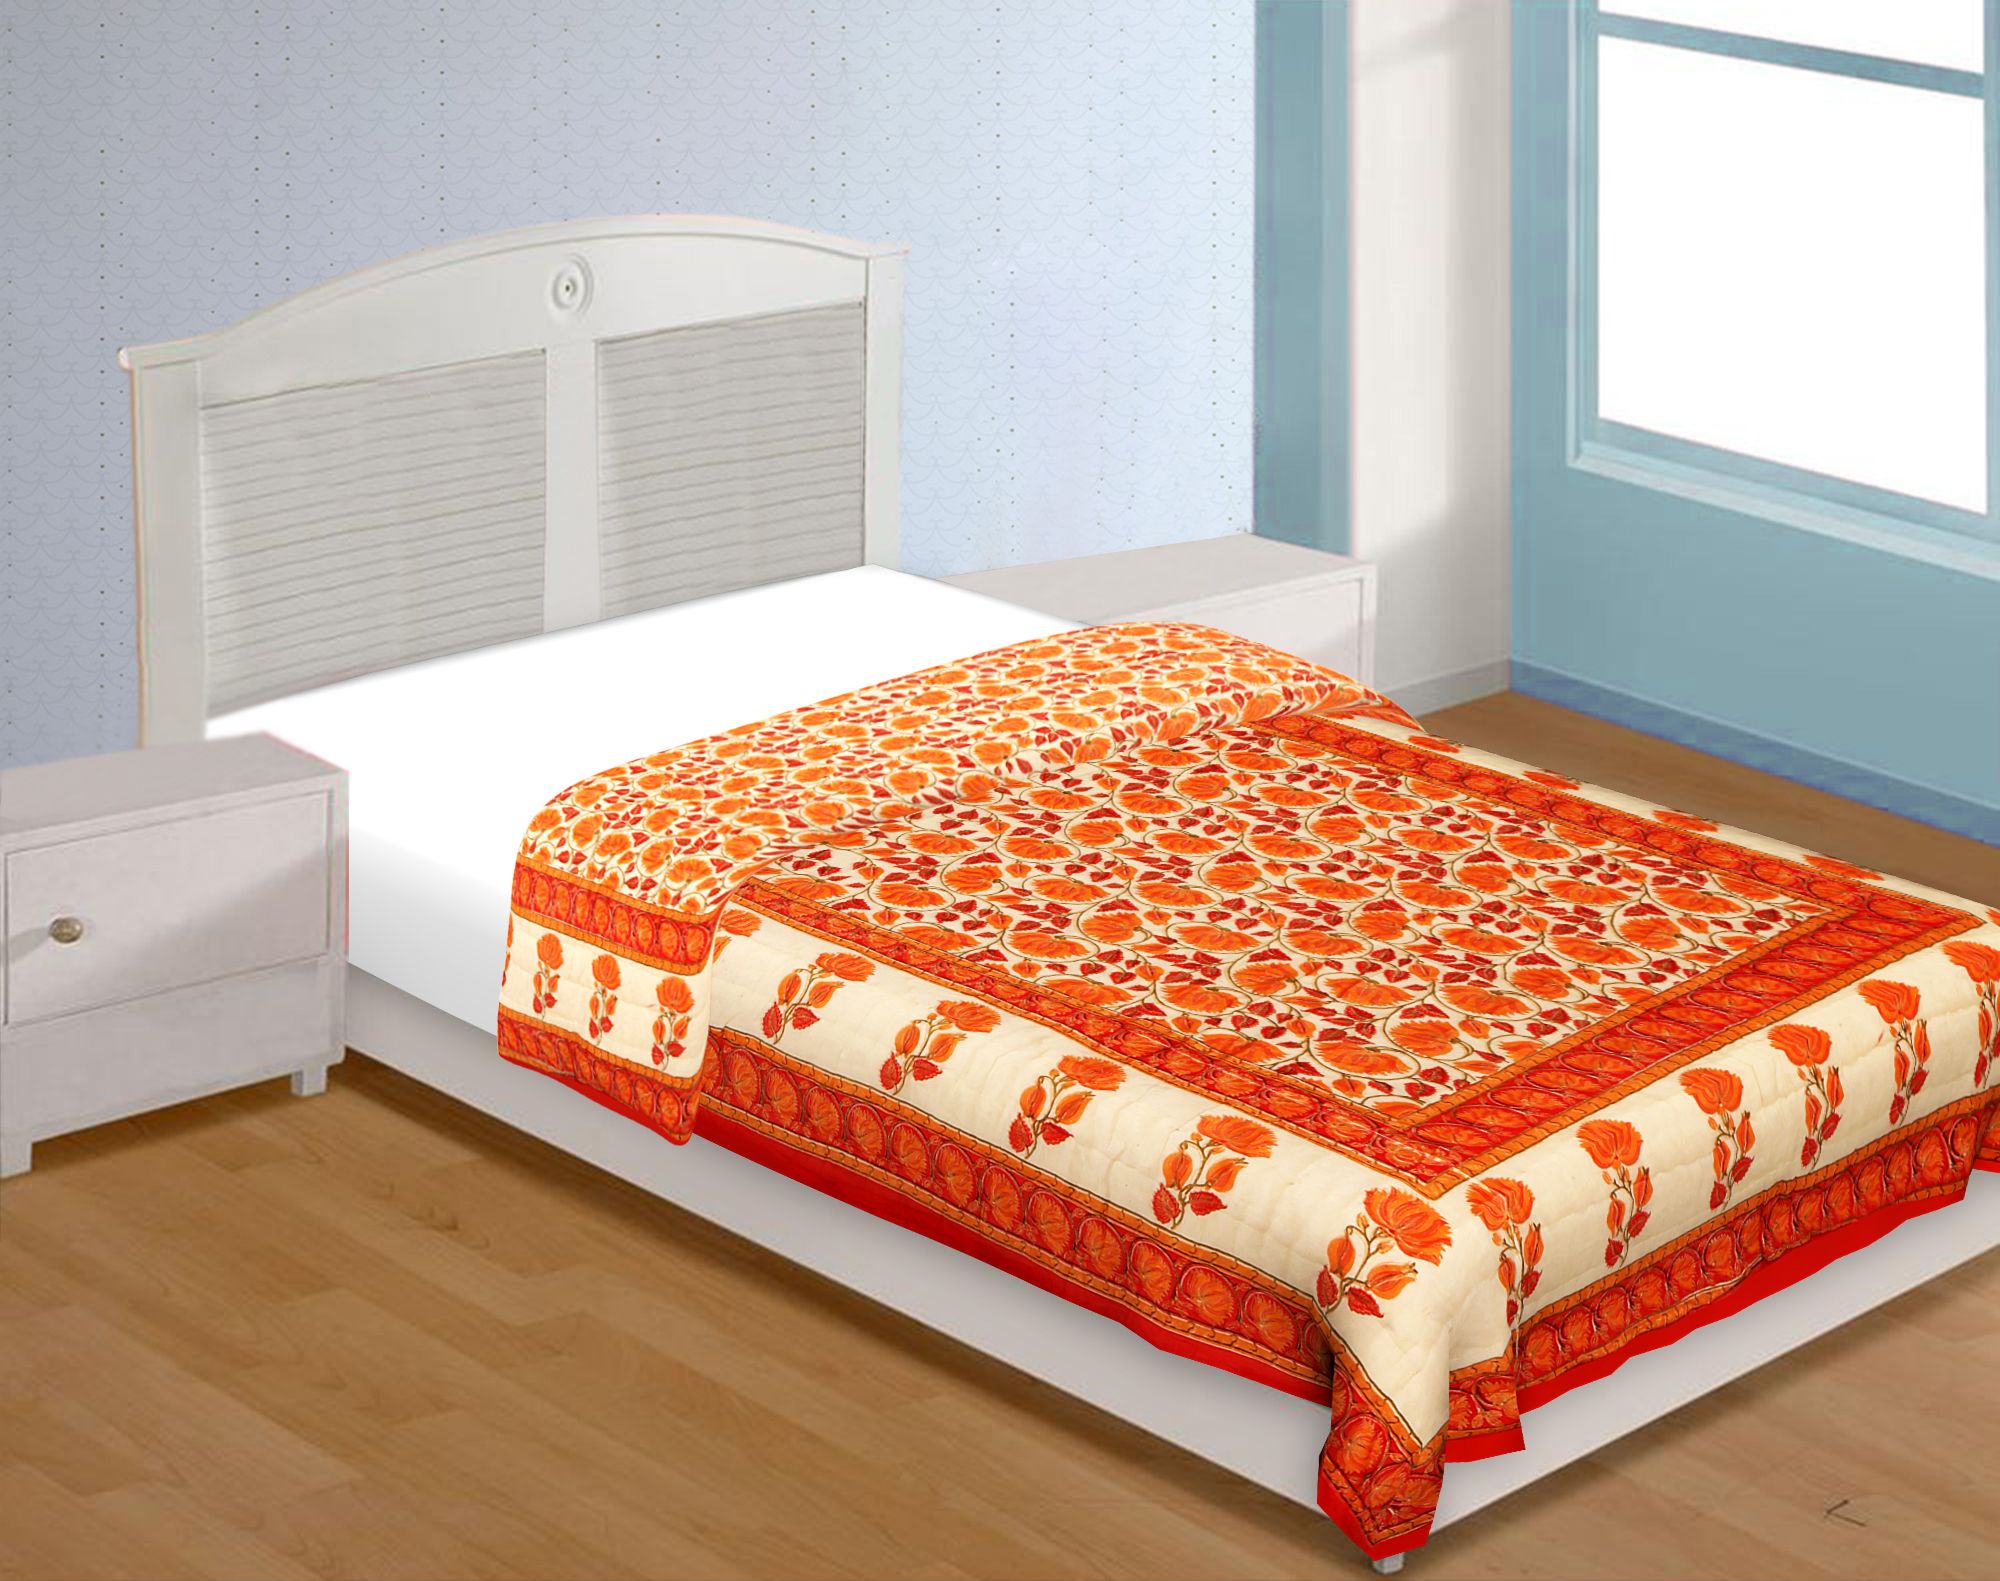 Orange And Cream Border With Golden Print Orange Flower Super Fine Cotton Voile(Mulmul) Both Side Printed Cotton Single Bed Quilt